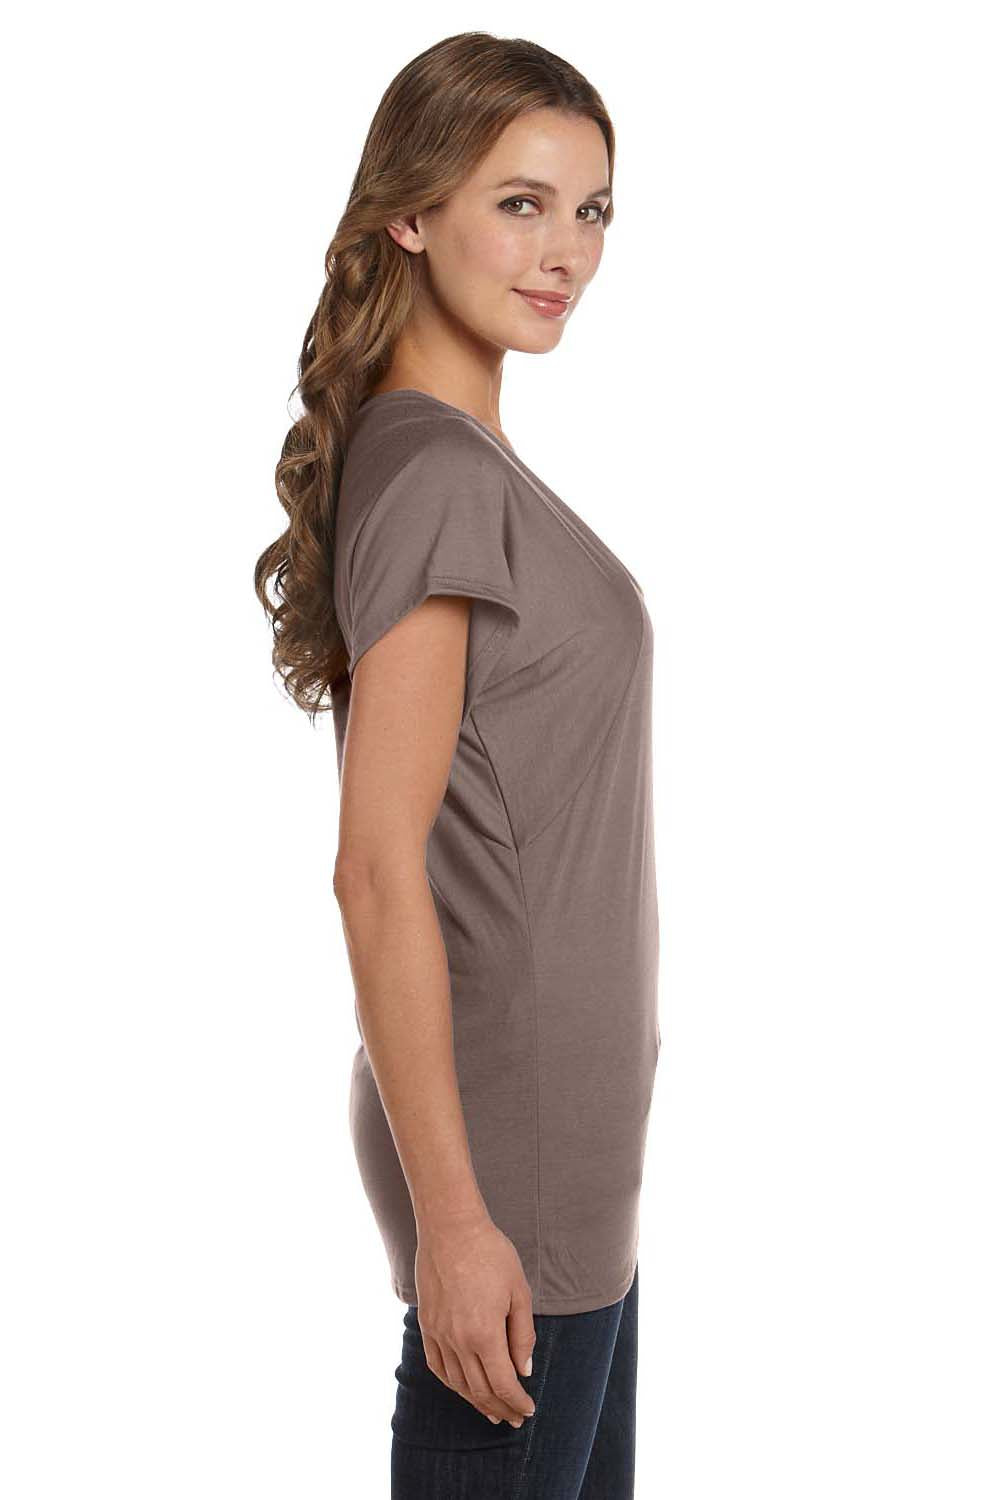 Bella + Canvas B8801 Womens Flowy Short Sleeve Scoop Neck T-Shirt Pebble Brown Side